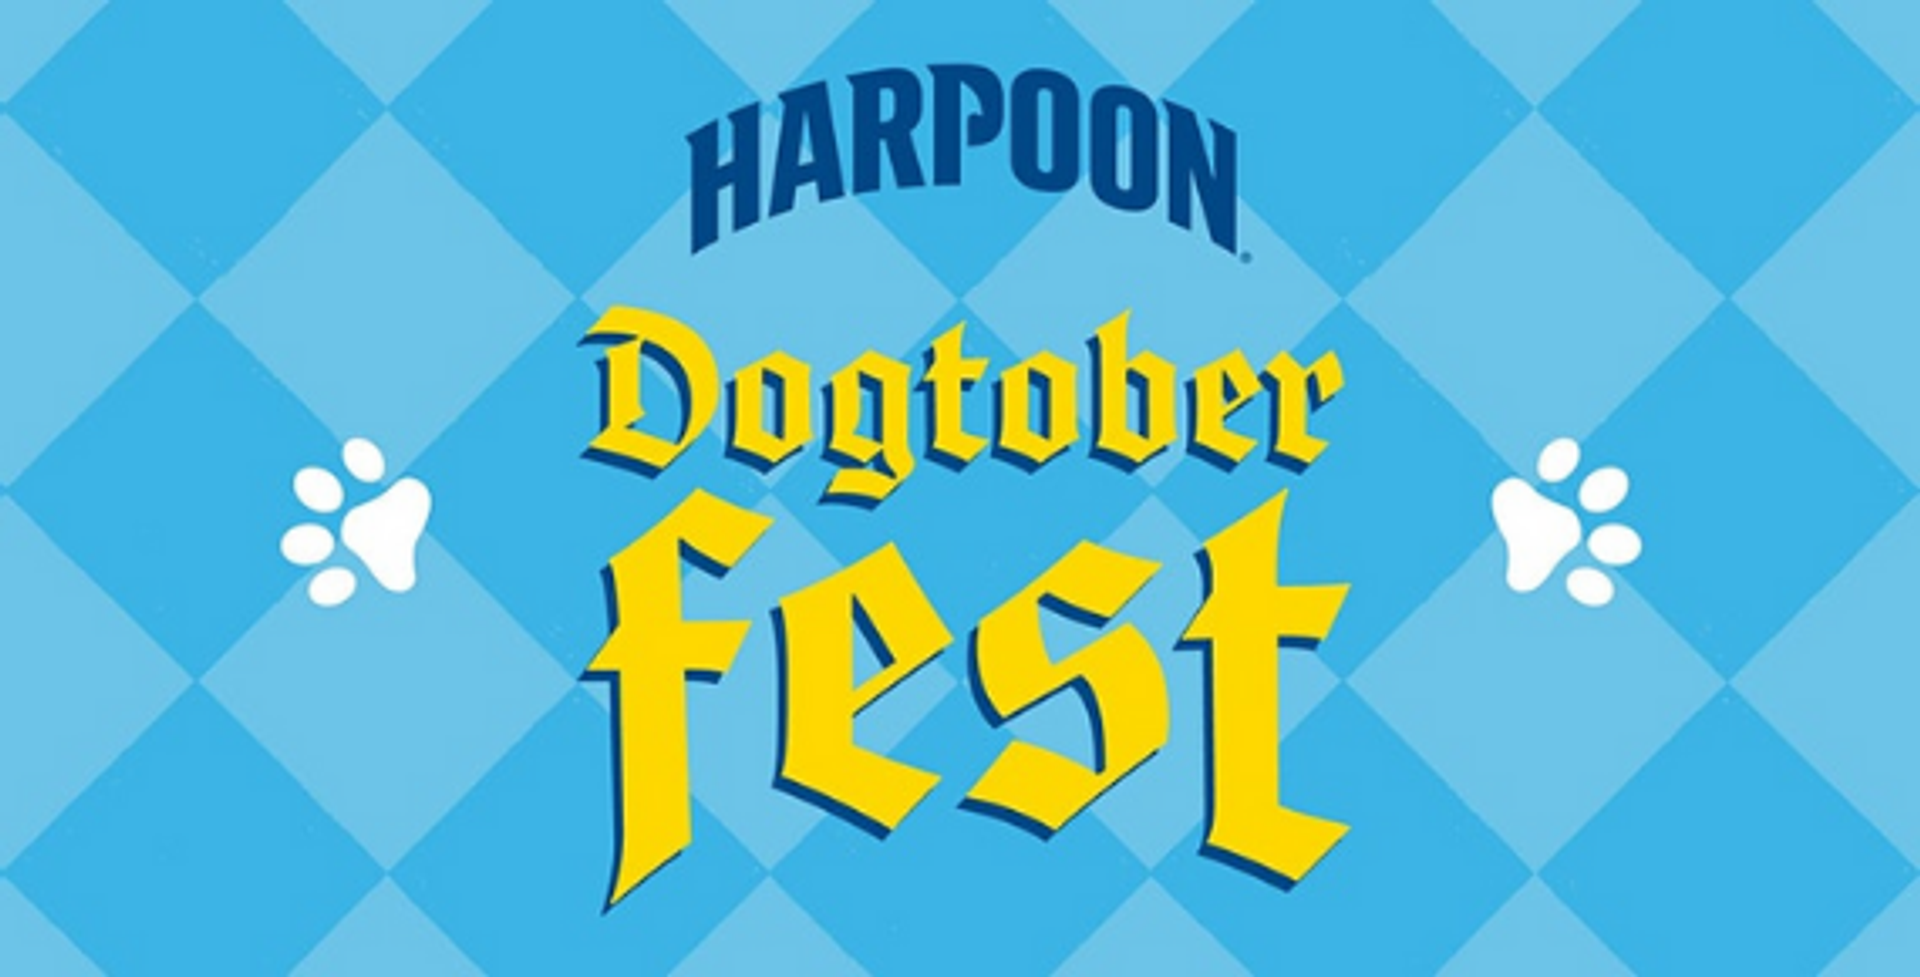 Harpoon Brewery: Dogtoberfest